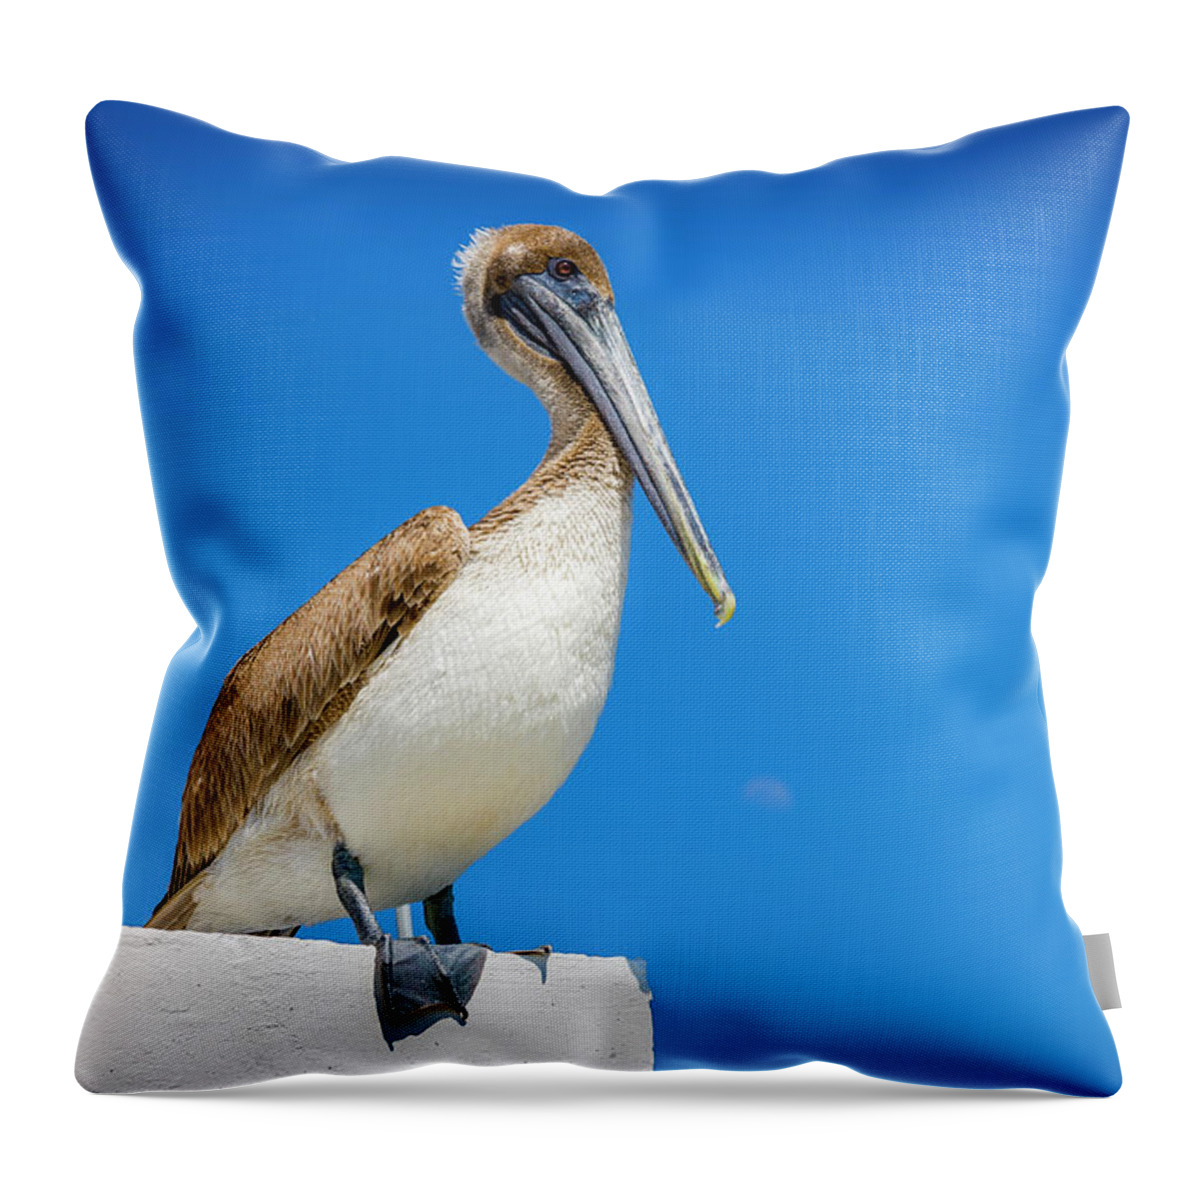 Birds Throw Pillow featuring the photograph Pelican by Daniel Murphy